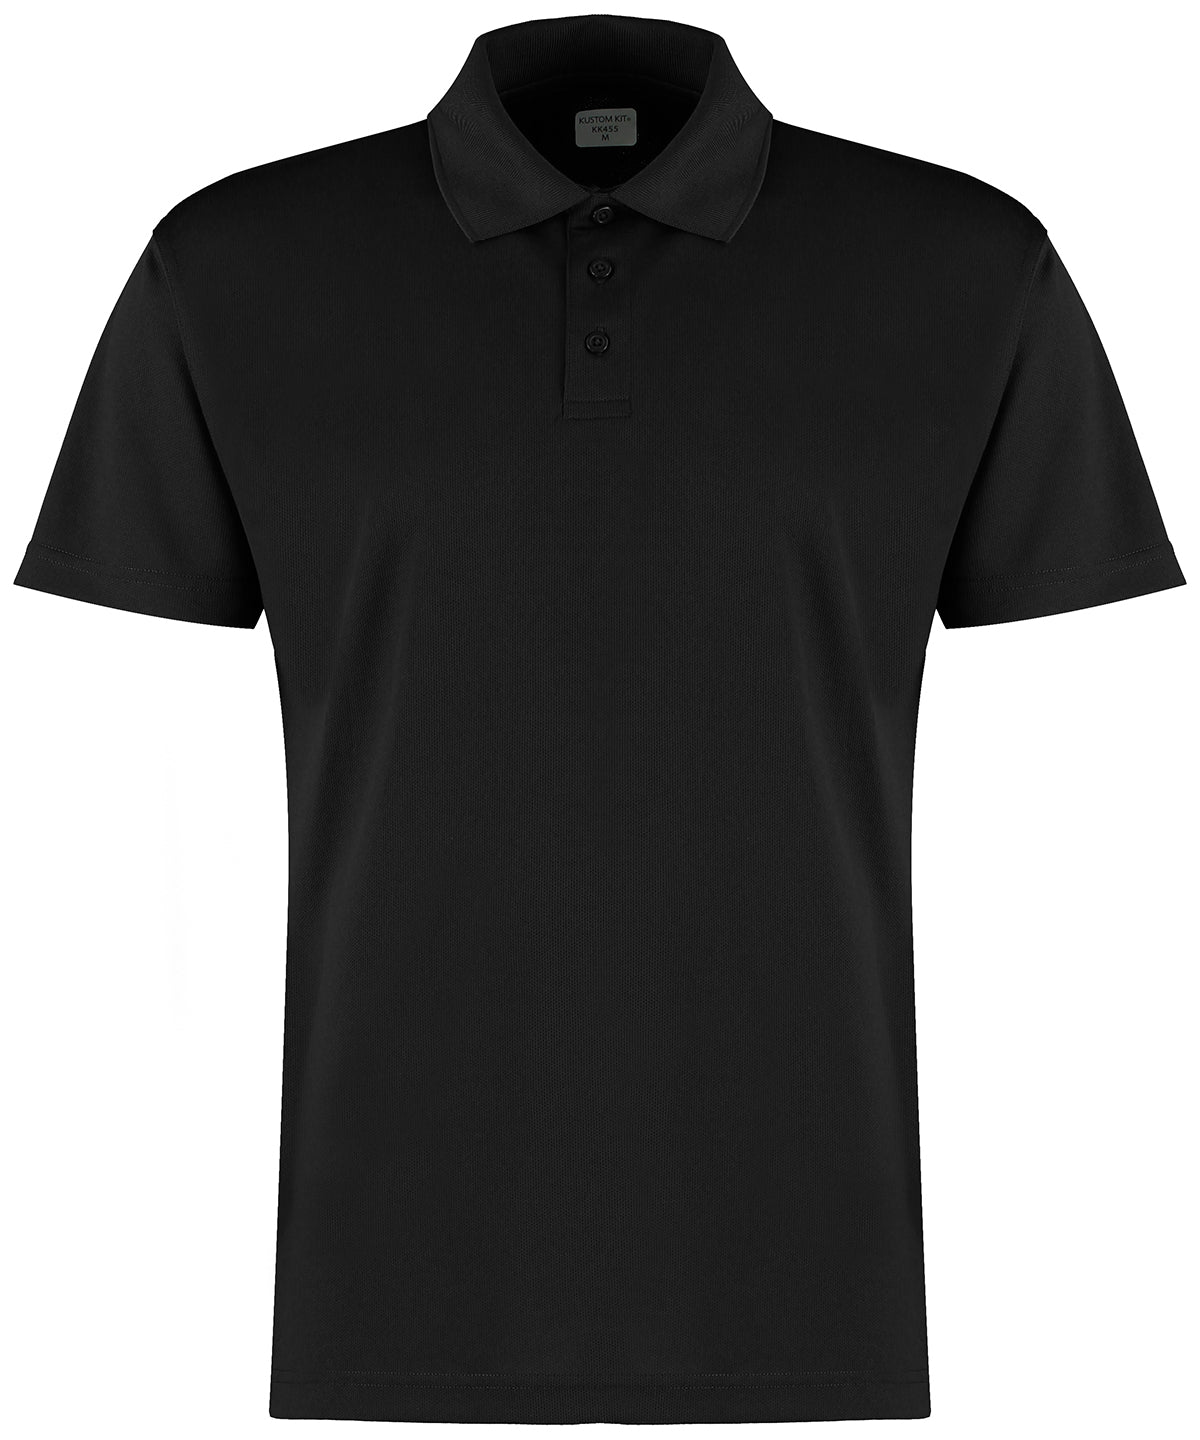 Personalised Polo Shirts - Black Kustom Kit Regular fit Cooltex® plus micro mesh polo